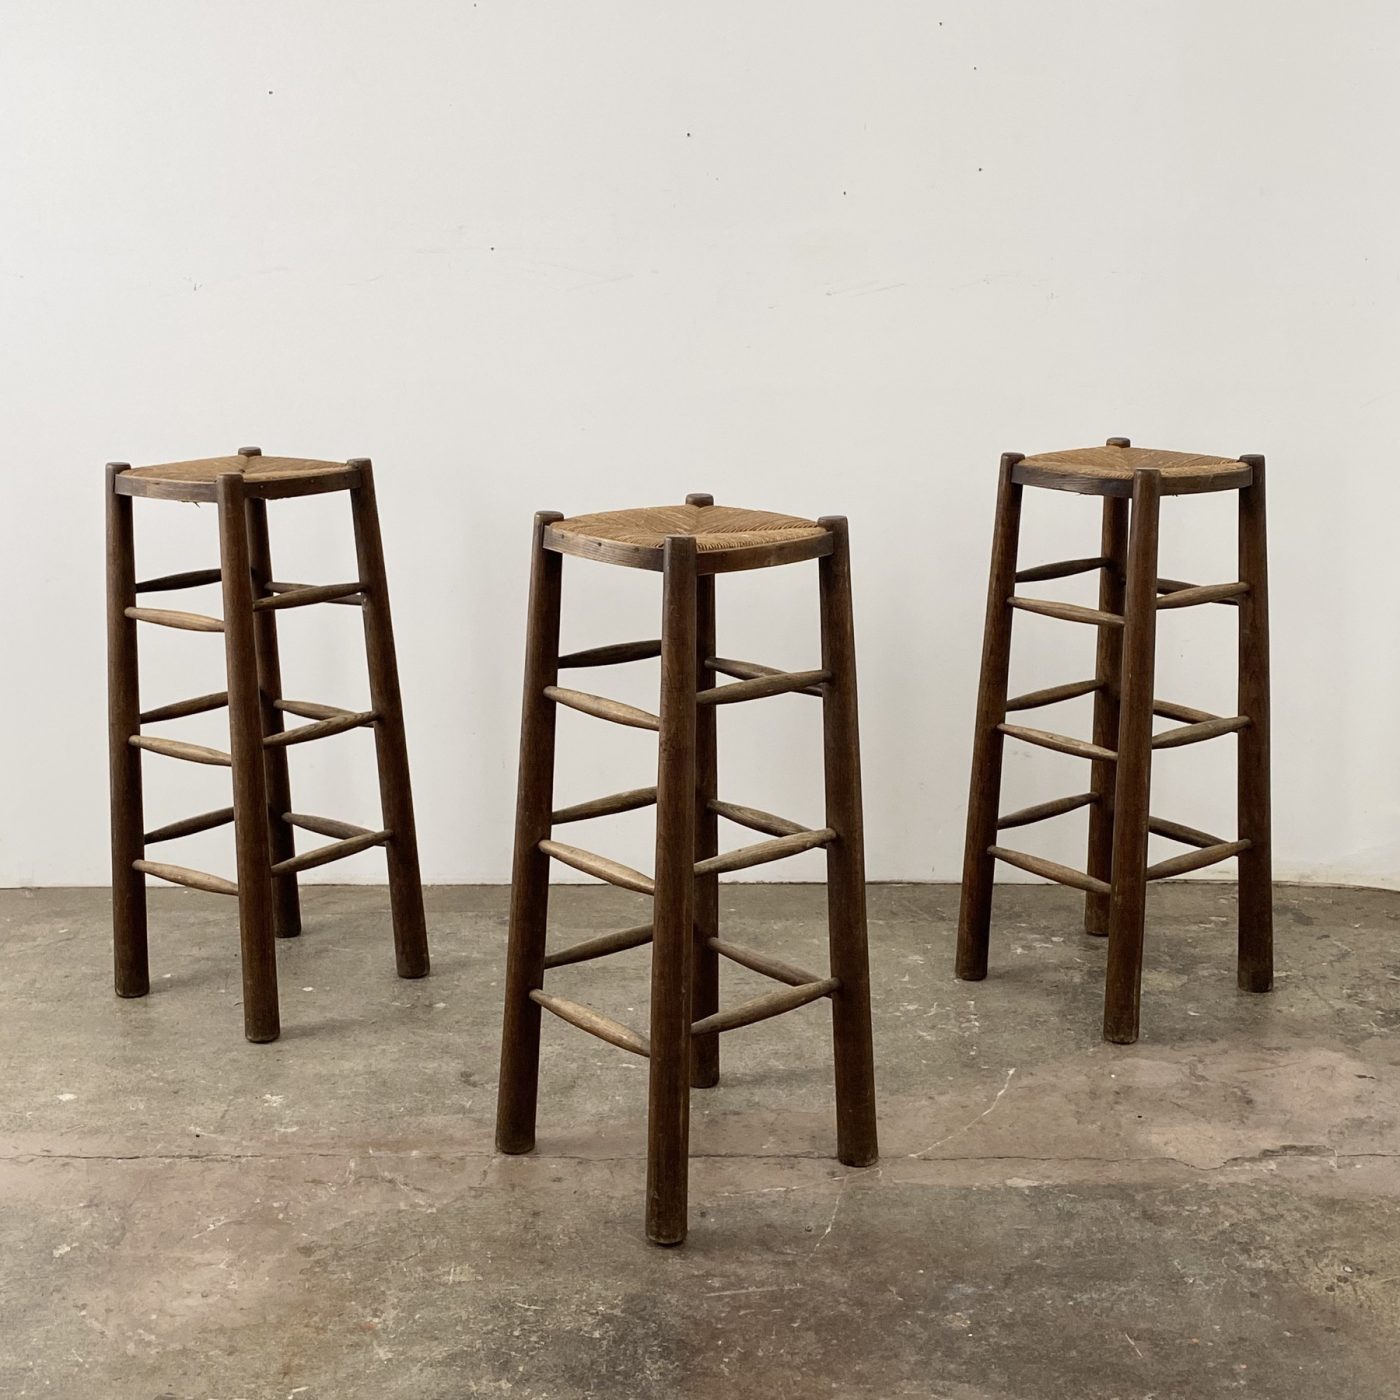 objet-vagabond-high-stools0001